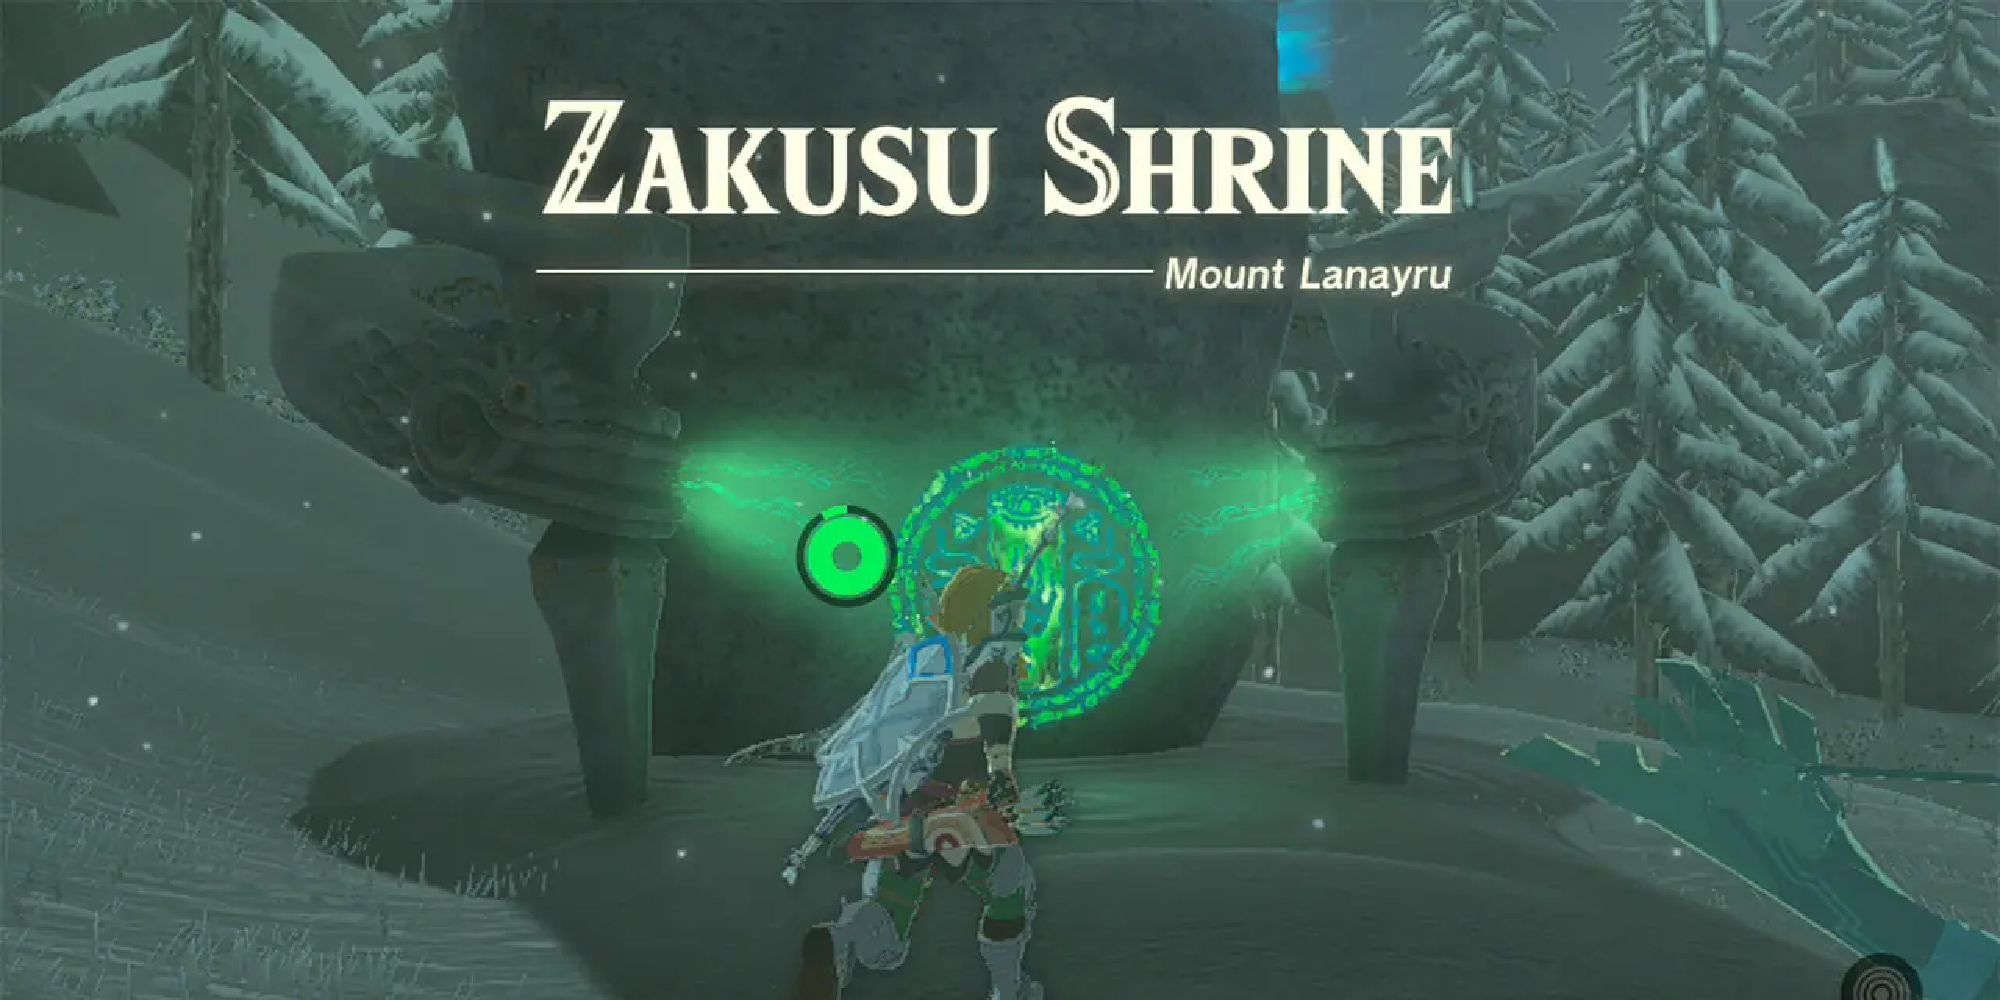 Link preparing to enter into the Zakusu Shrine